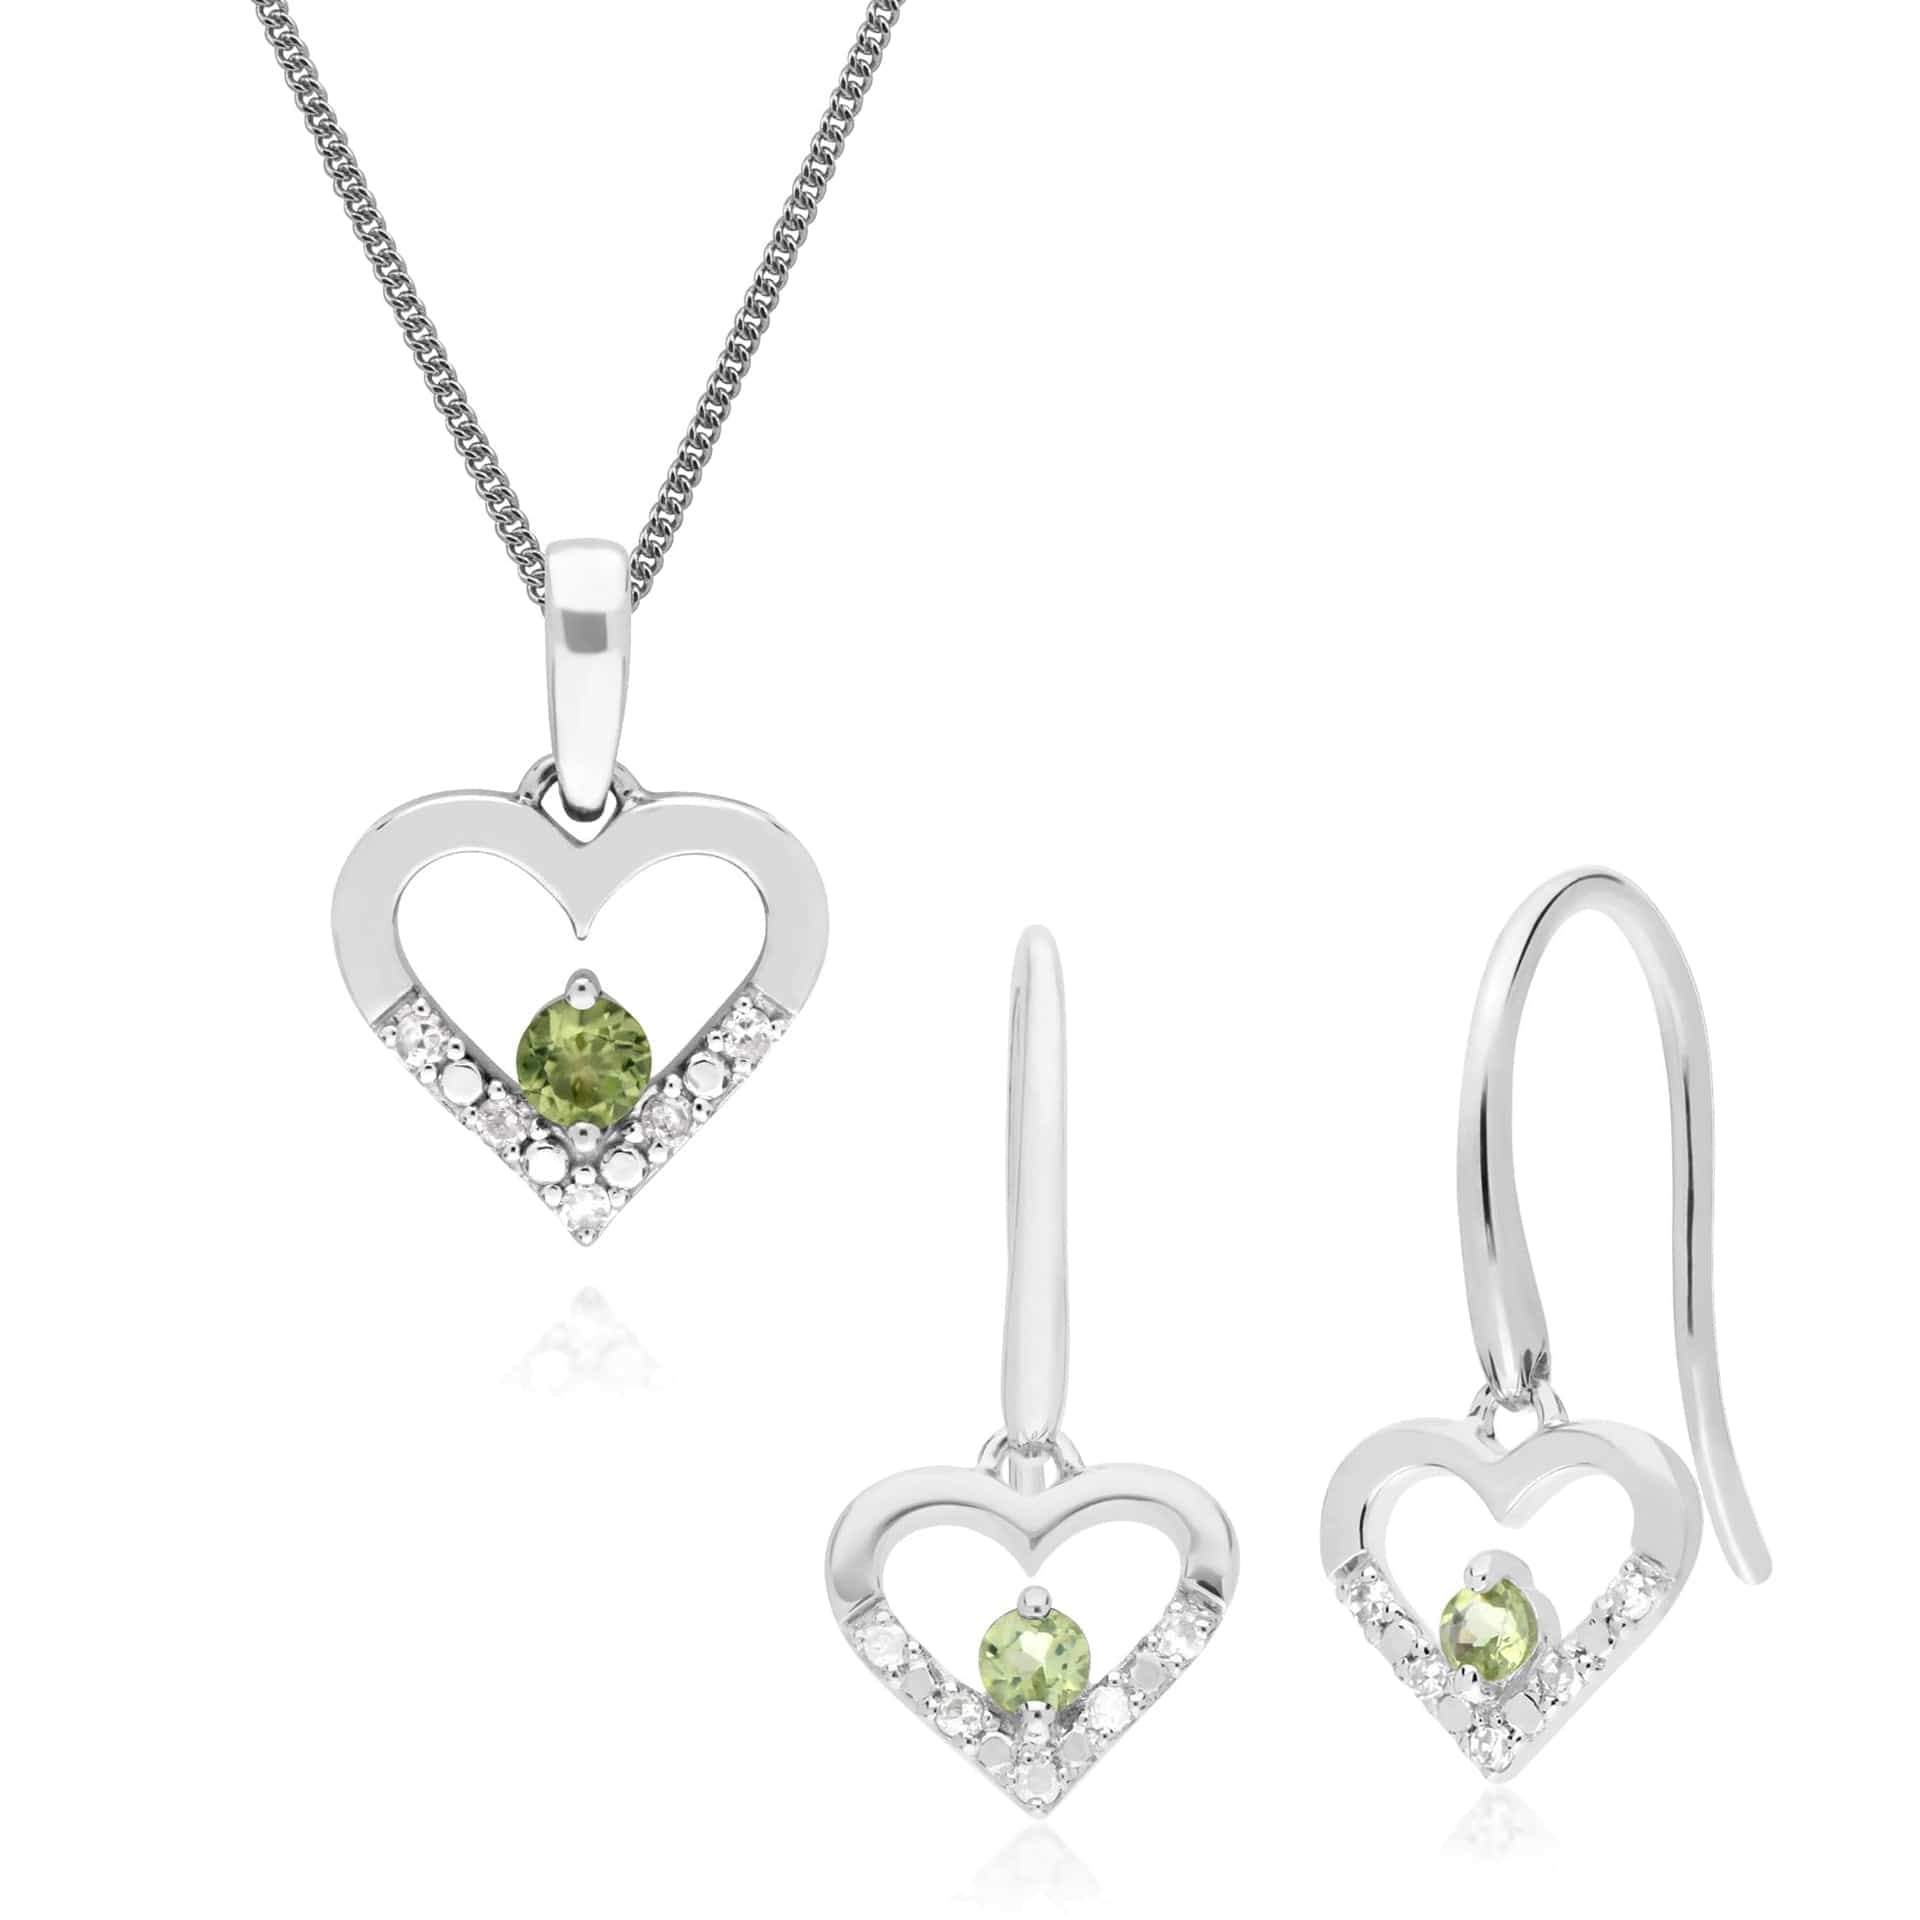 162E0258089-162P0219089 Classic Round Peridot & Diamond Heart Drop Earrings & Pendant Set in 9ct White Gold 1